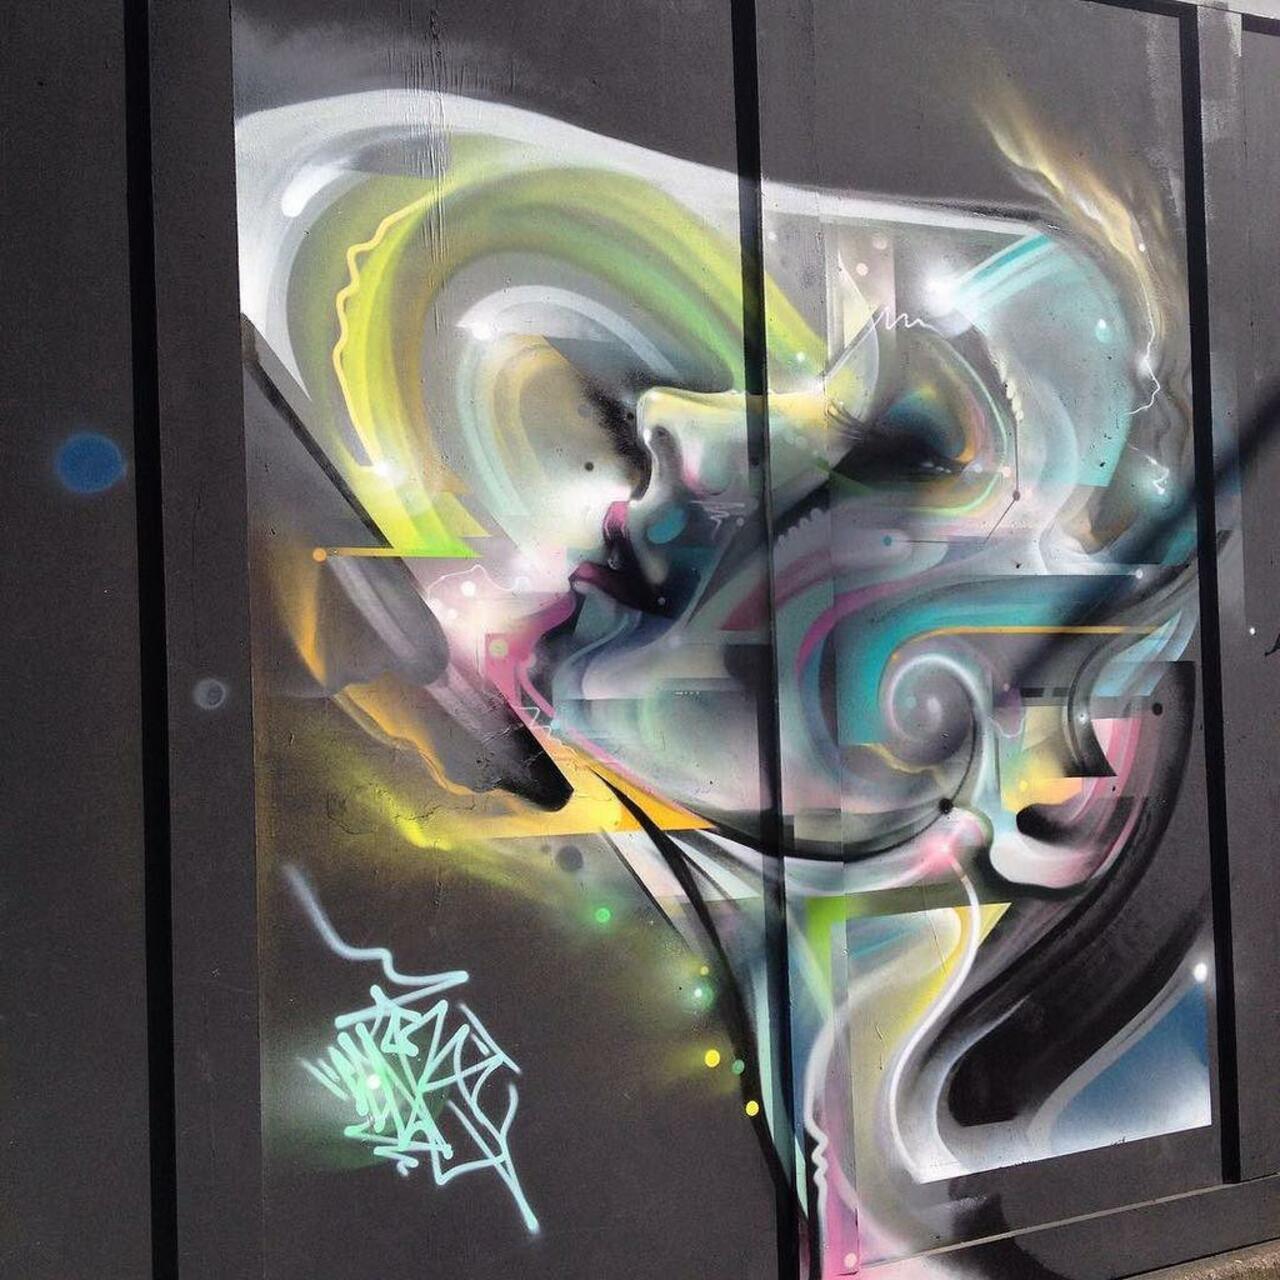 "@StArtEverywhere: #streetart #graffiti #streetartlondon #london #thisislondon by isadarko http://t.co/p30fDmDQC7" maravilhoso